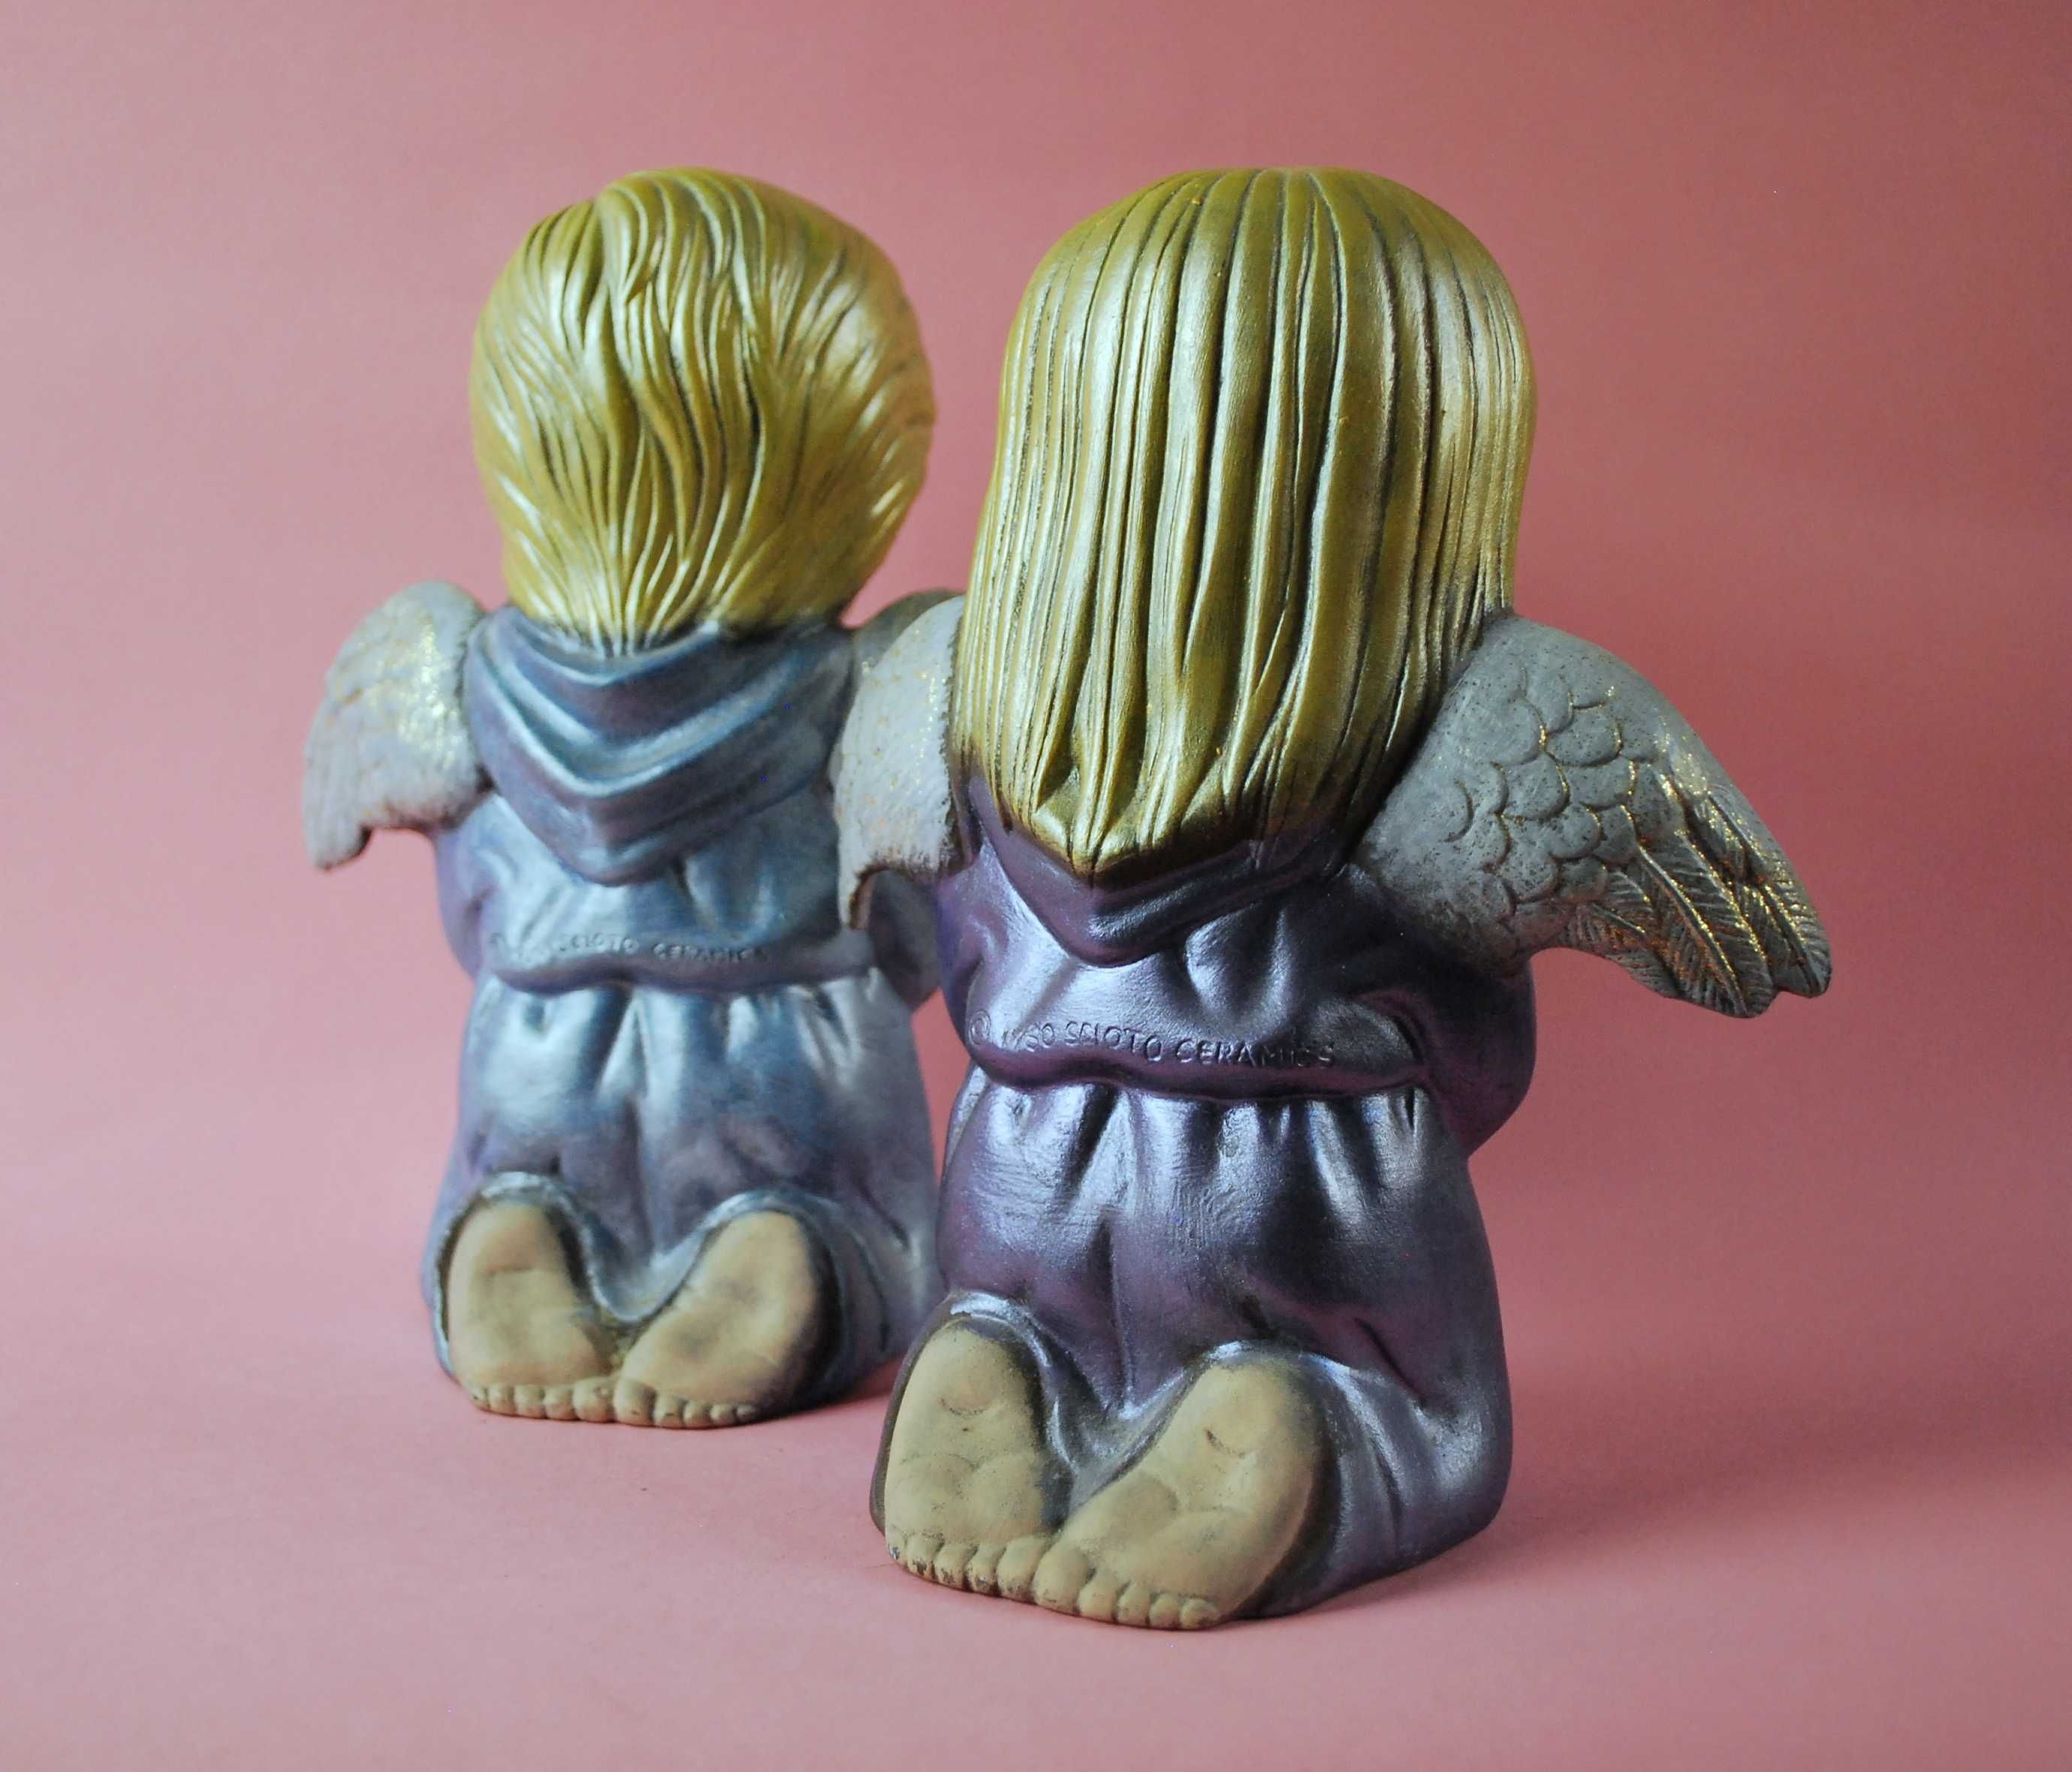 scioto ceramics 1980 aniołki figurki vintage